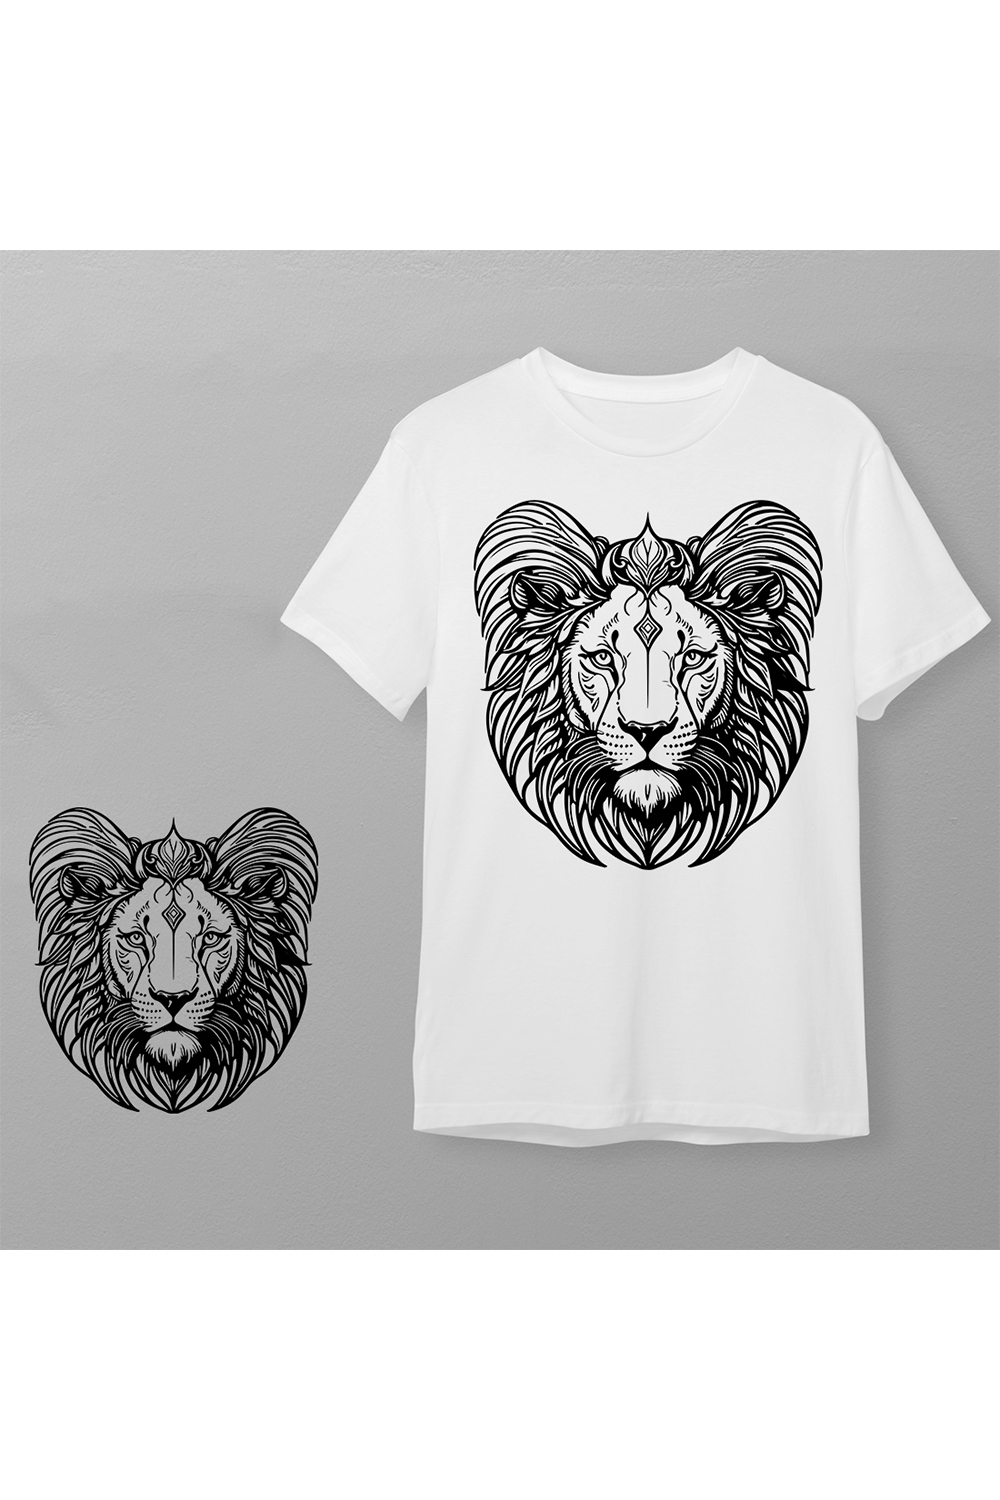 Lion Print Tshirt | Multi-Purpose Graphic Designs Vector pinterest preview image.